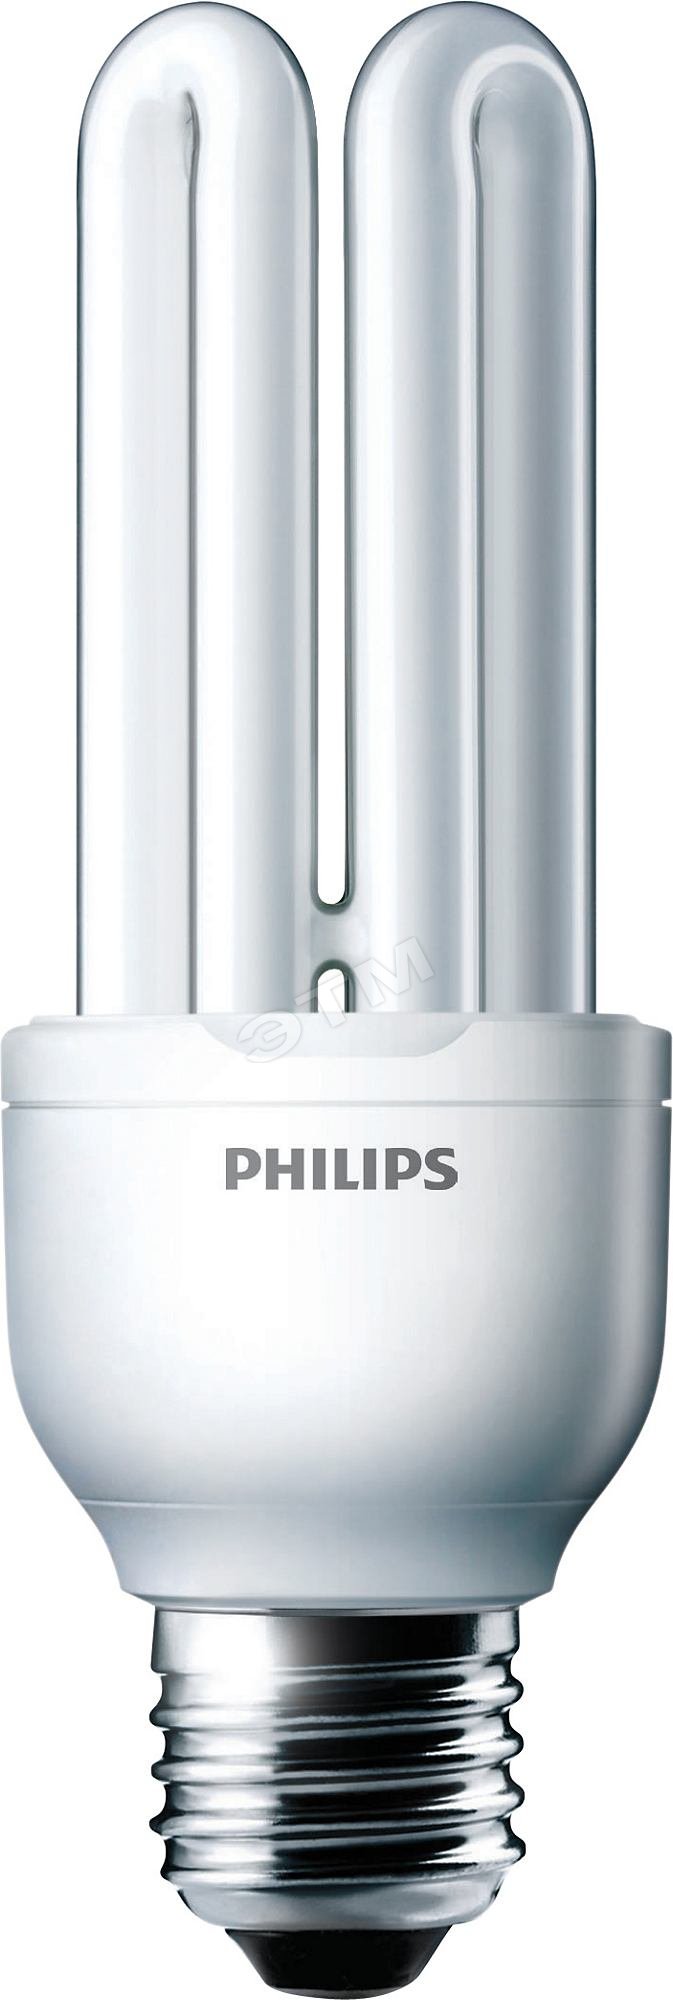 Филипс 18. Энергосберегающие лампы Philips 18w. Лампа Philips Ecohome Stick 23w CDL e27. Лампа люминесцентная компактная энергосберегающая Philips Ecotone 220-240b 18bt. Philips 30w e27 220-240 led.